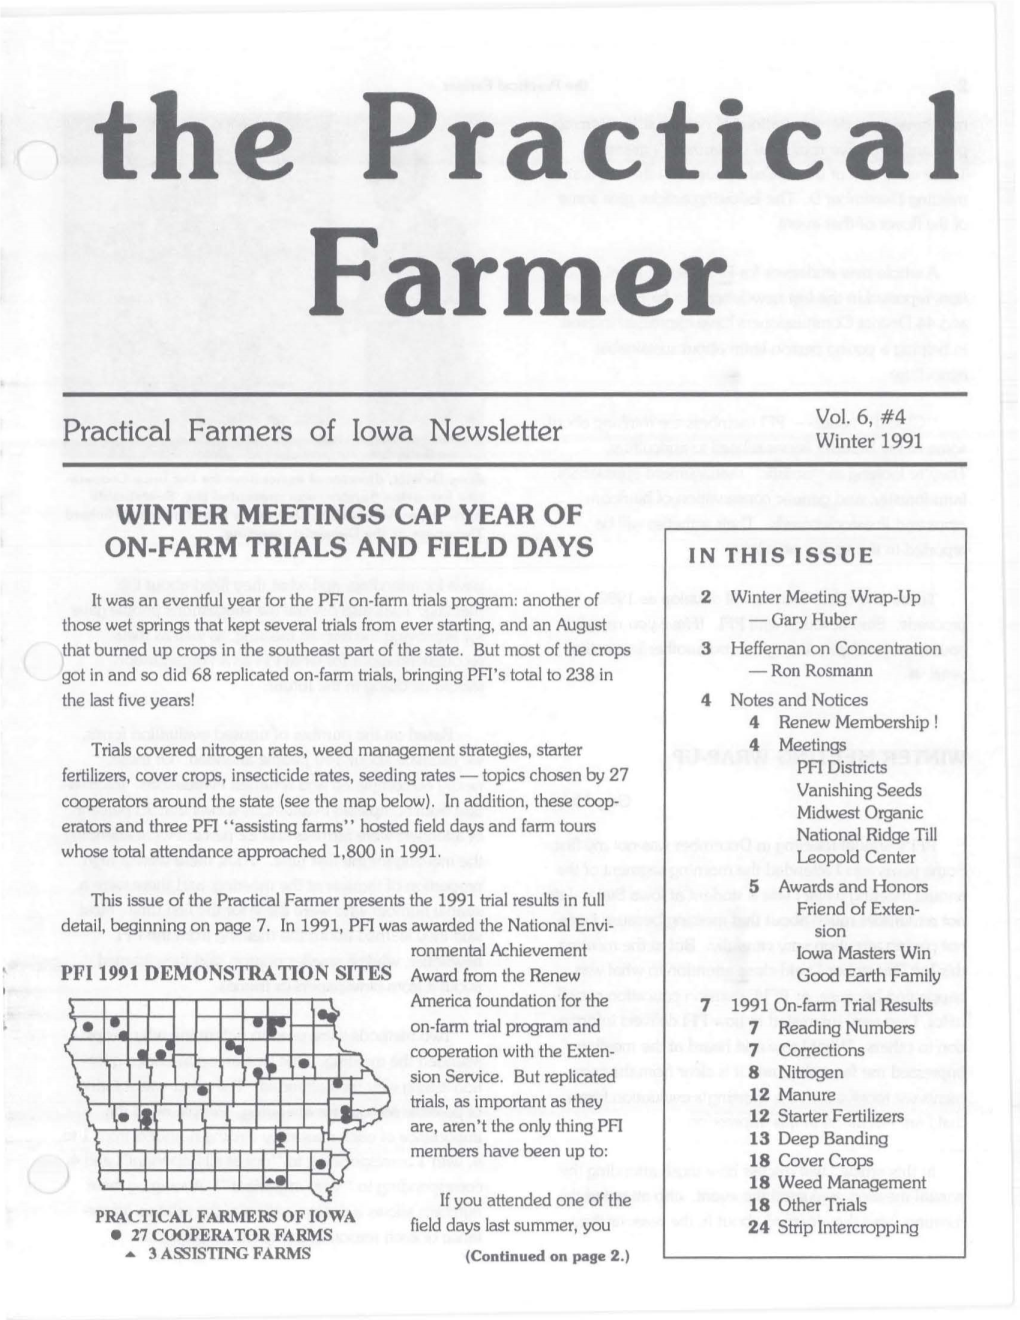 Practical Farmers of Iowa Newsletter